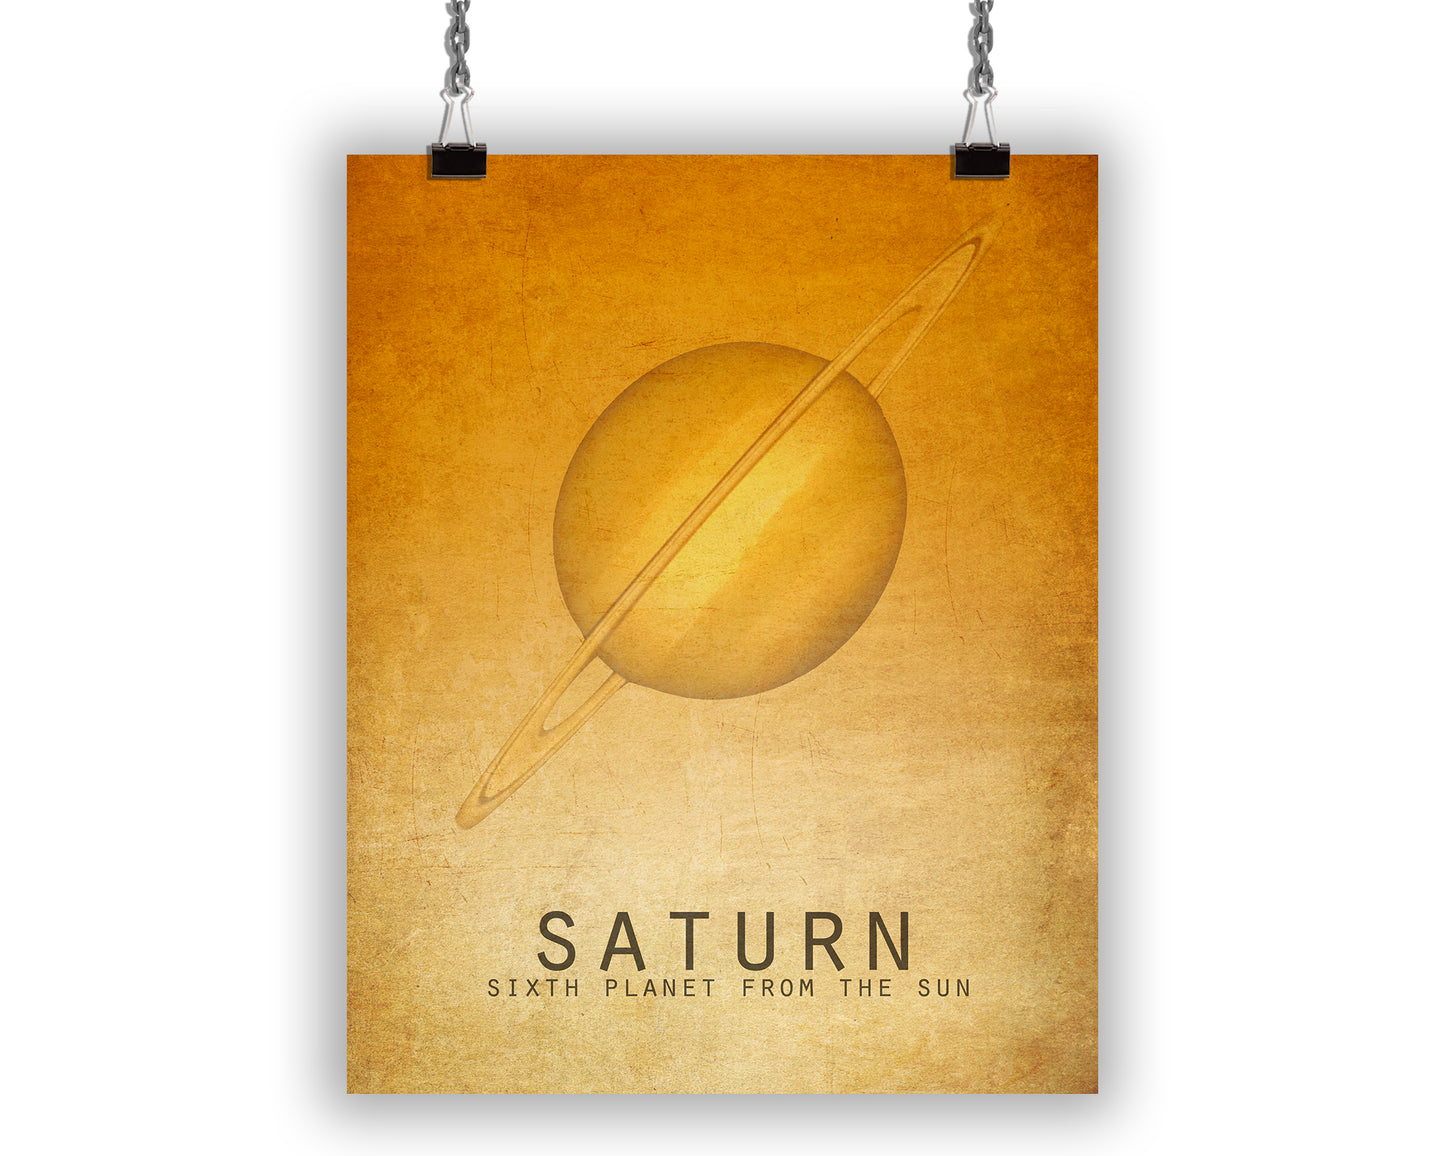 Art print with prange minimalist image of the planet saturn